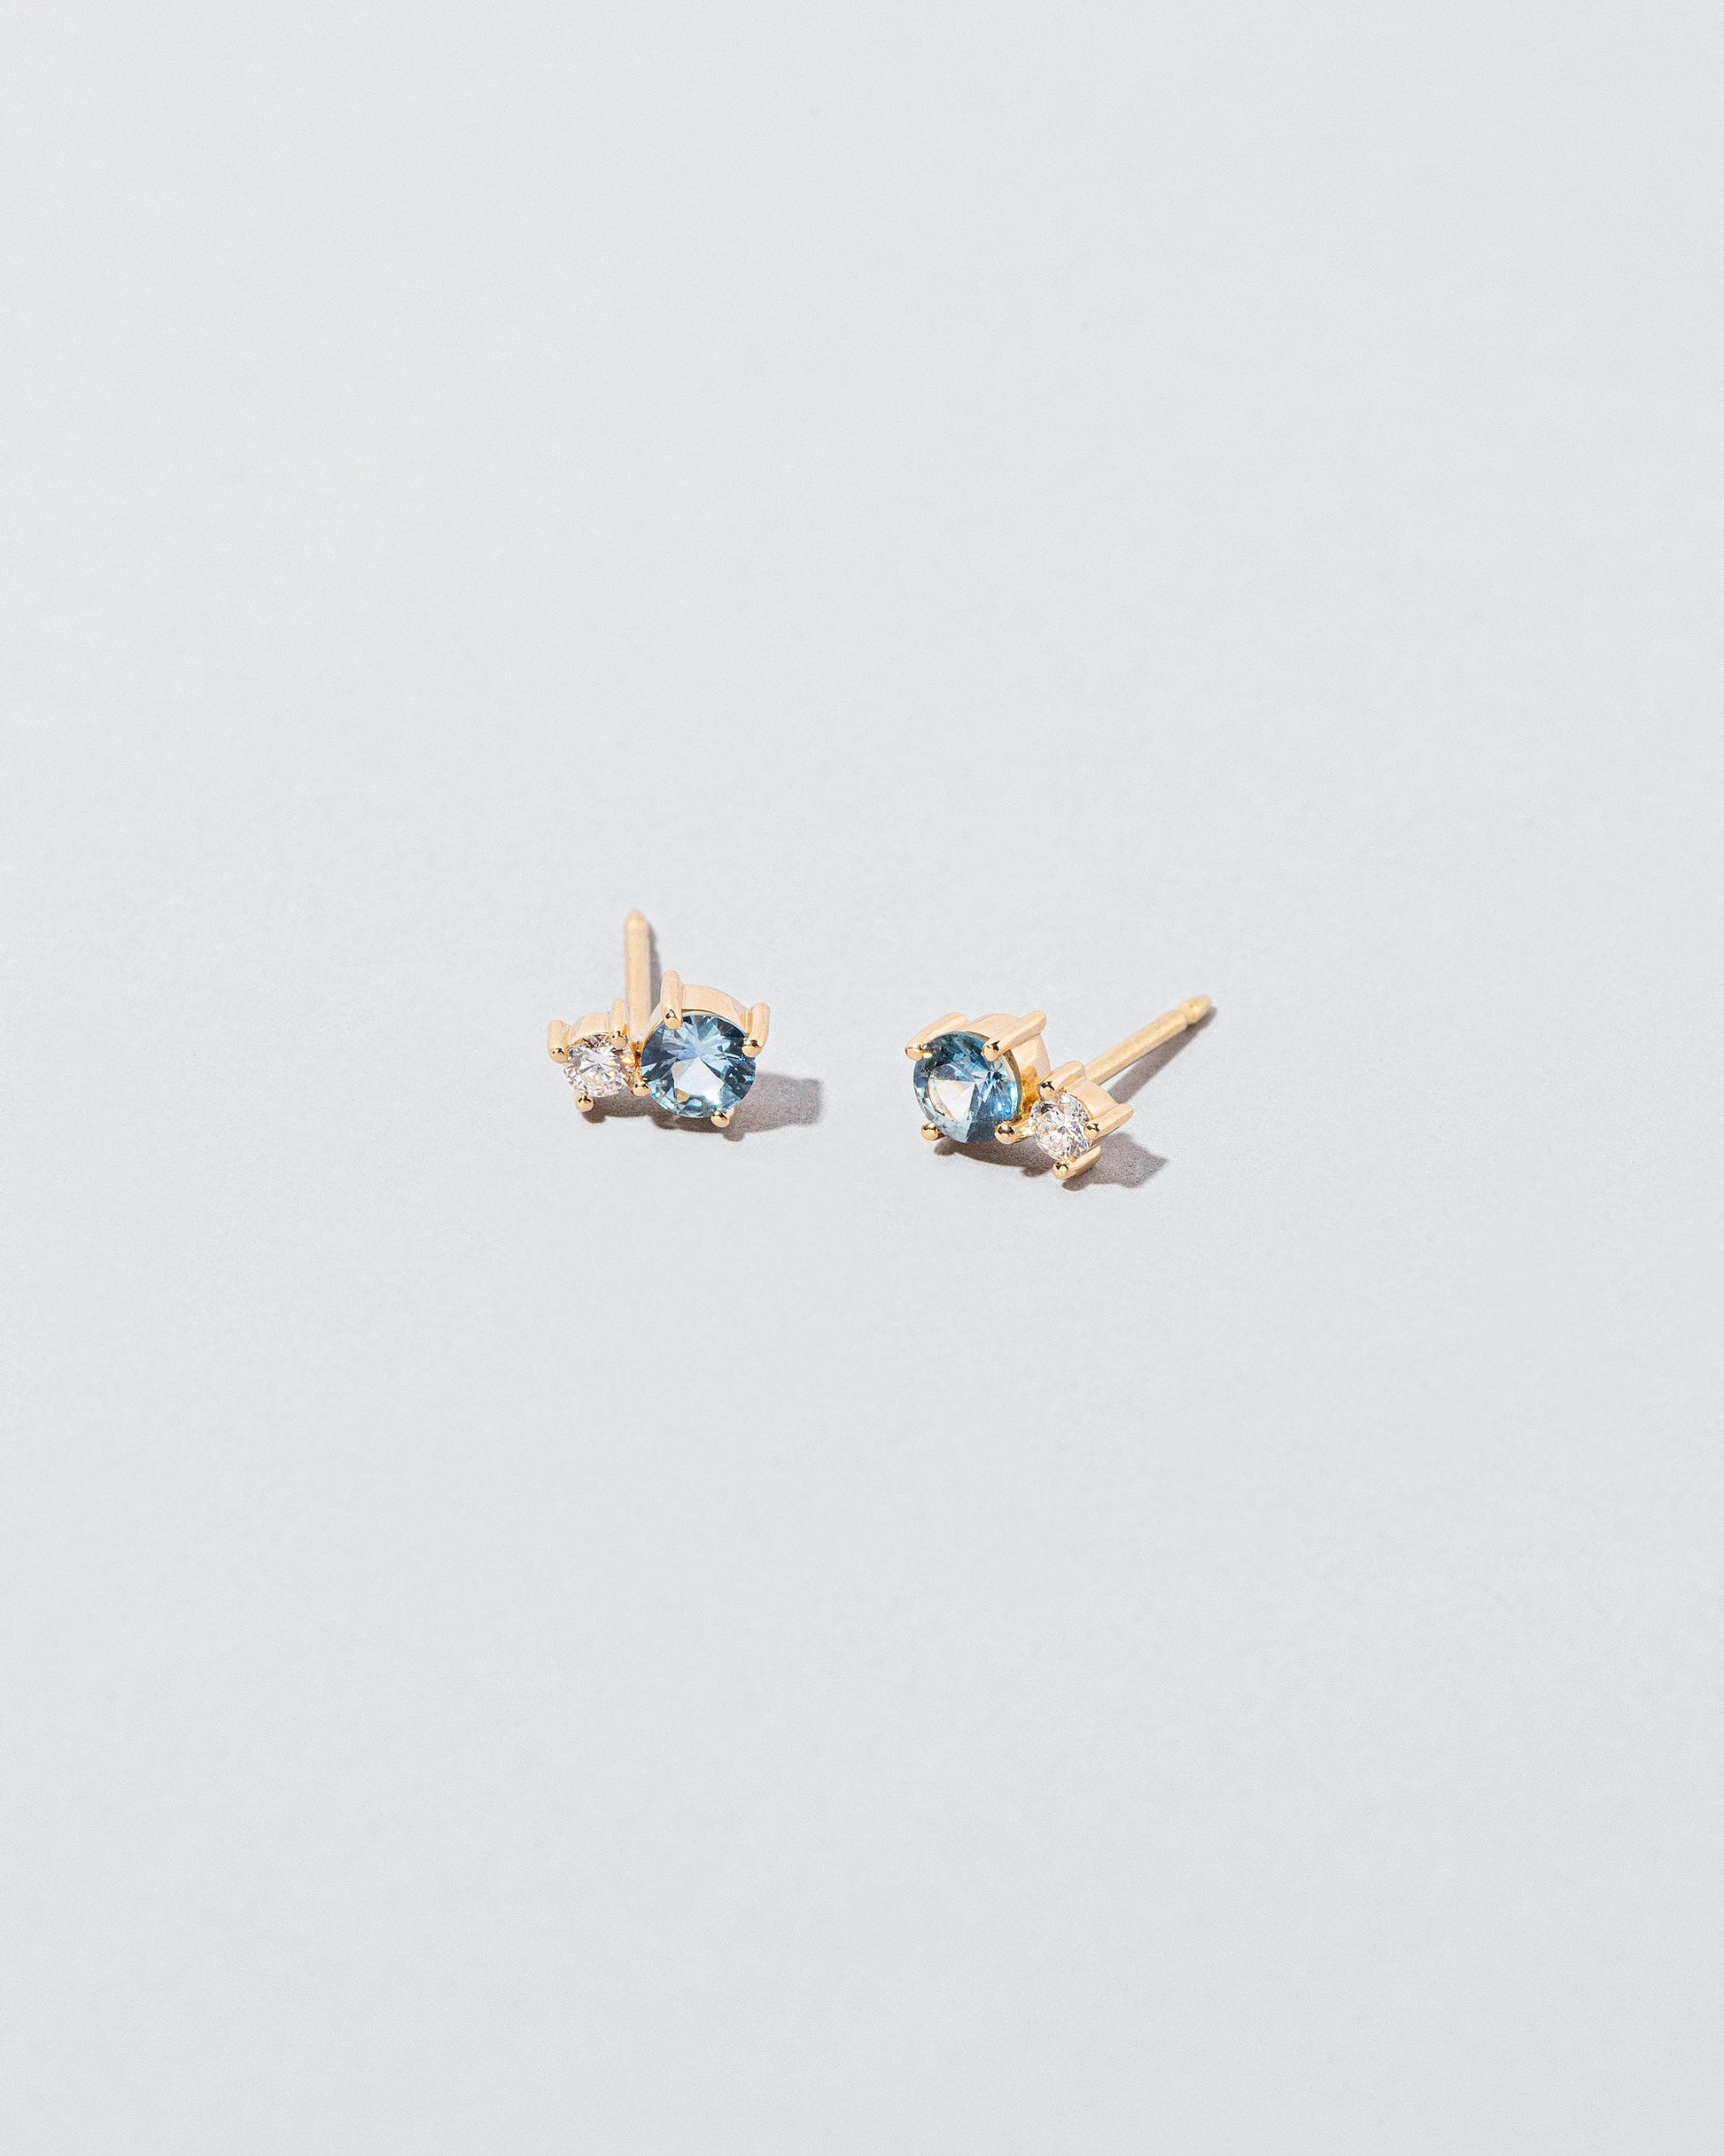  Aster Earrings on light color background.